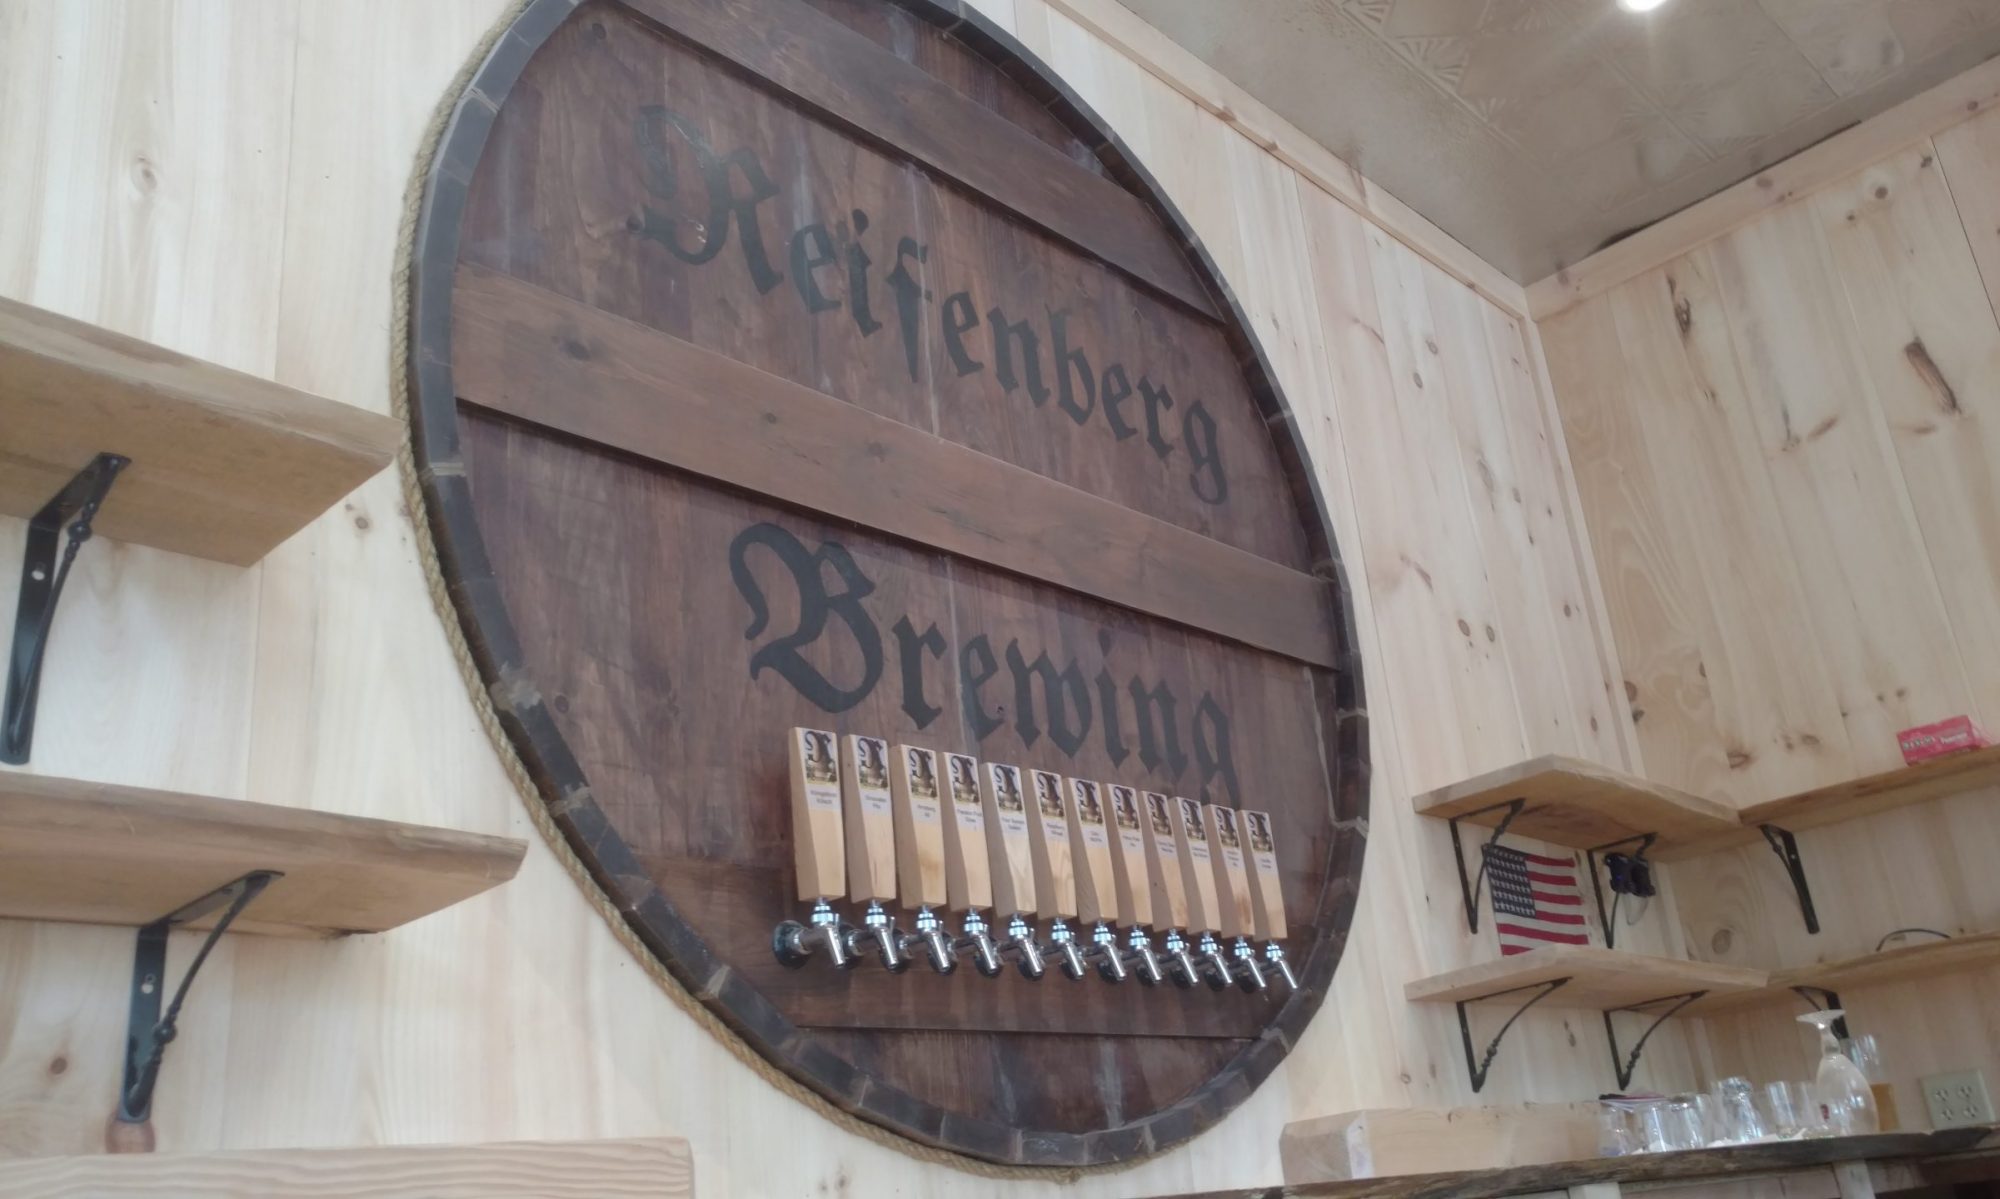 Reifenberg Brewing